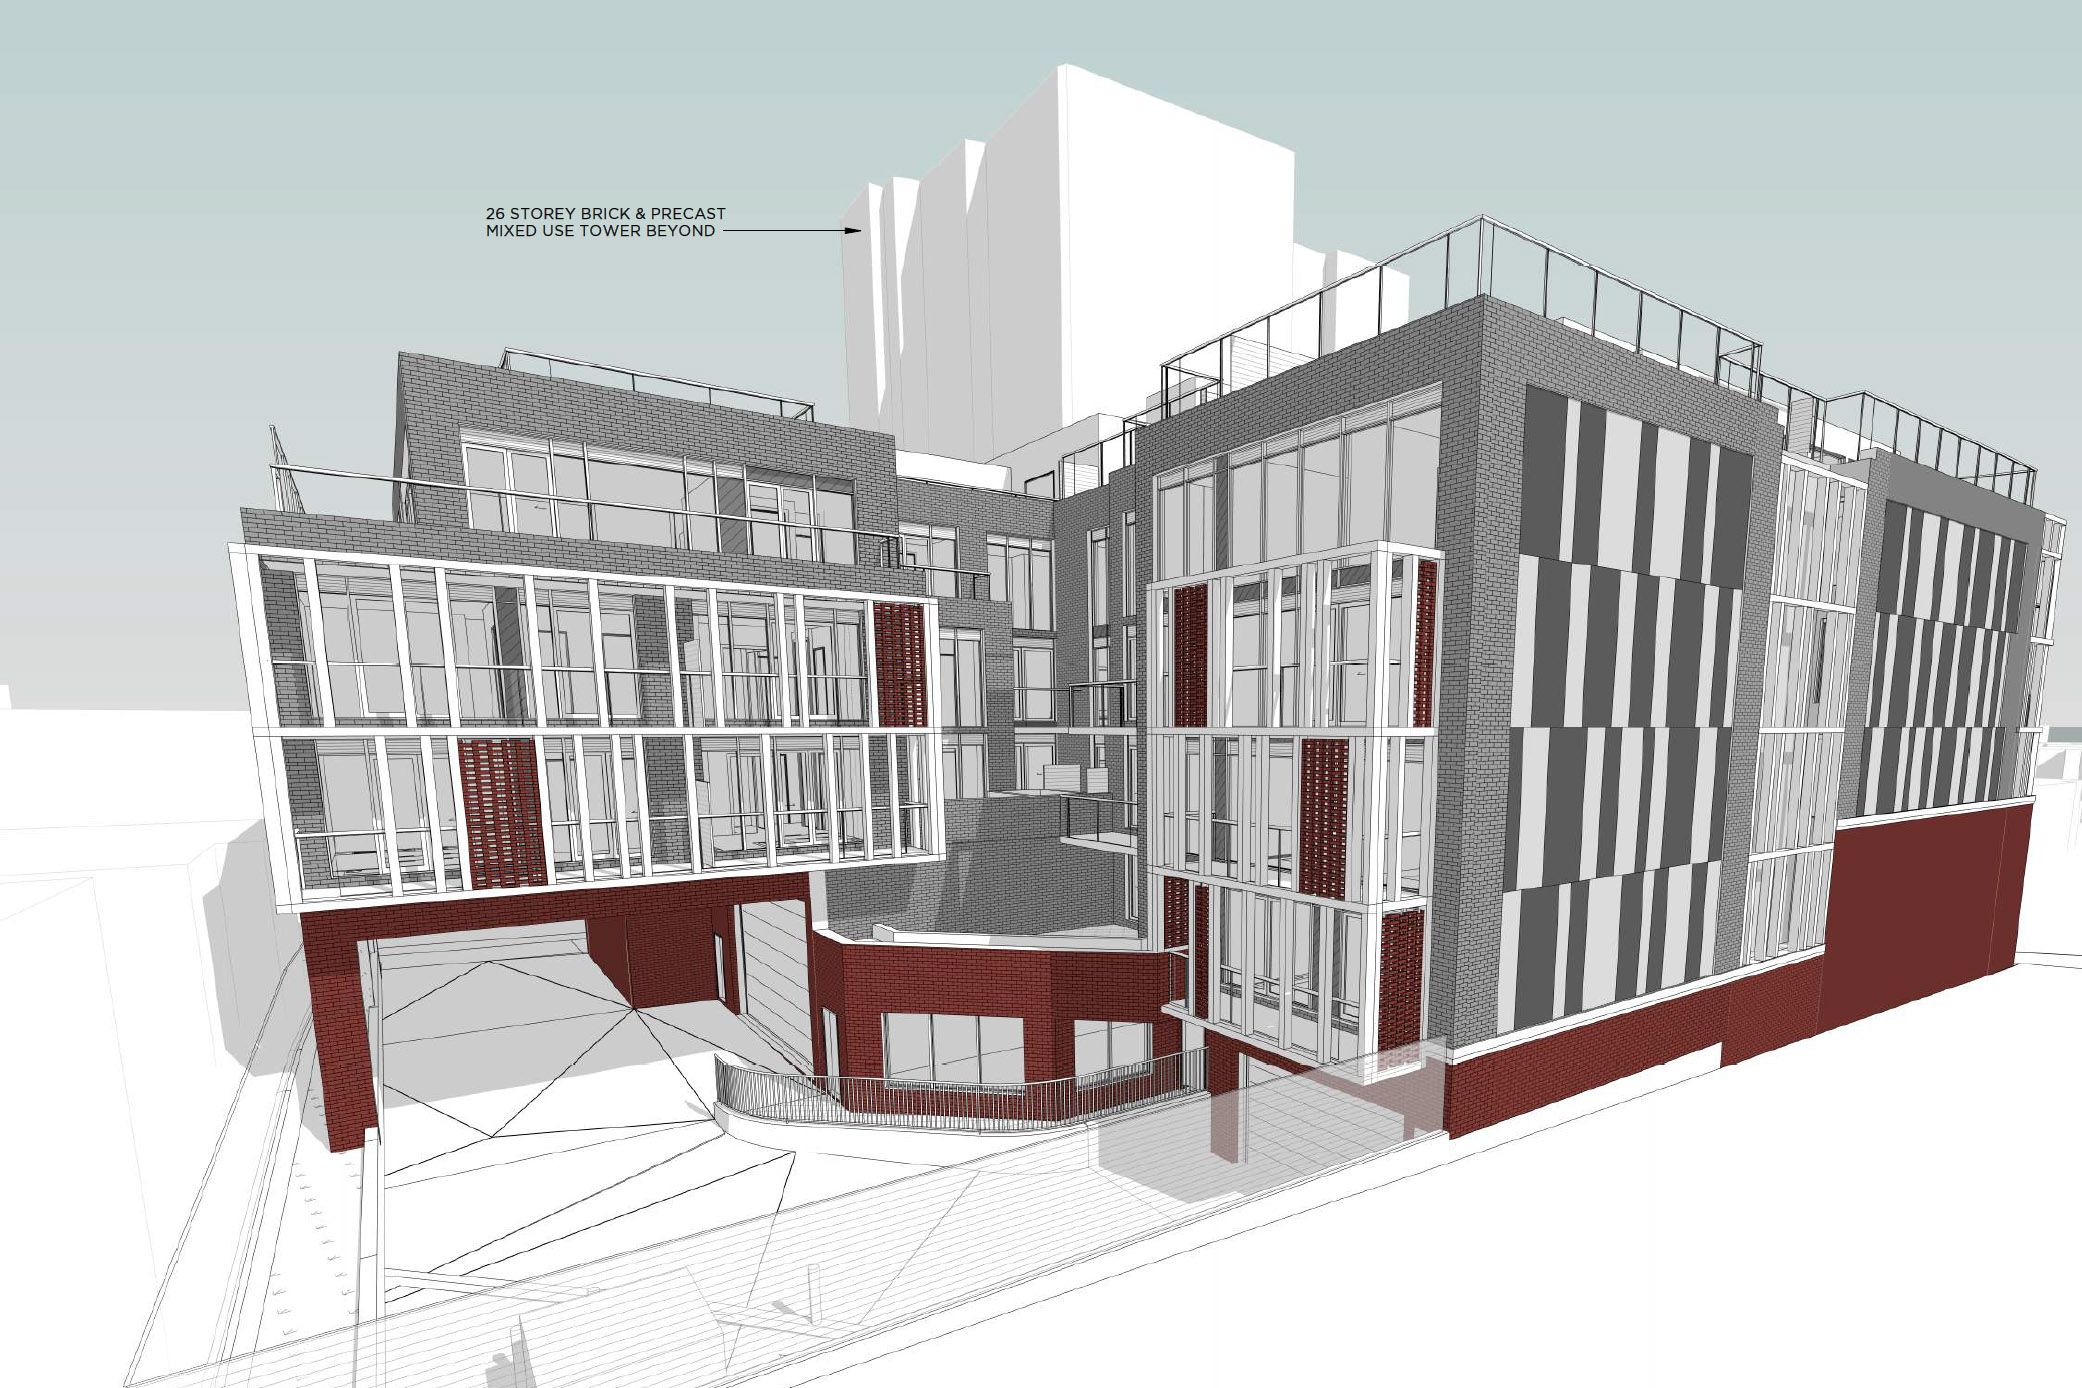 406 Keele Street, Toronto, designed by RAW Design for Block Developments